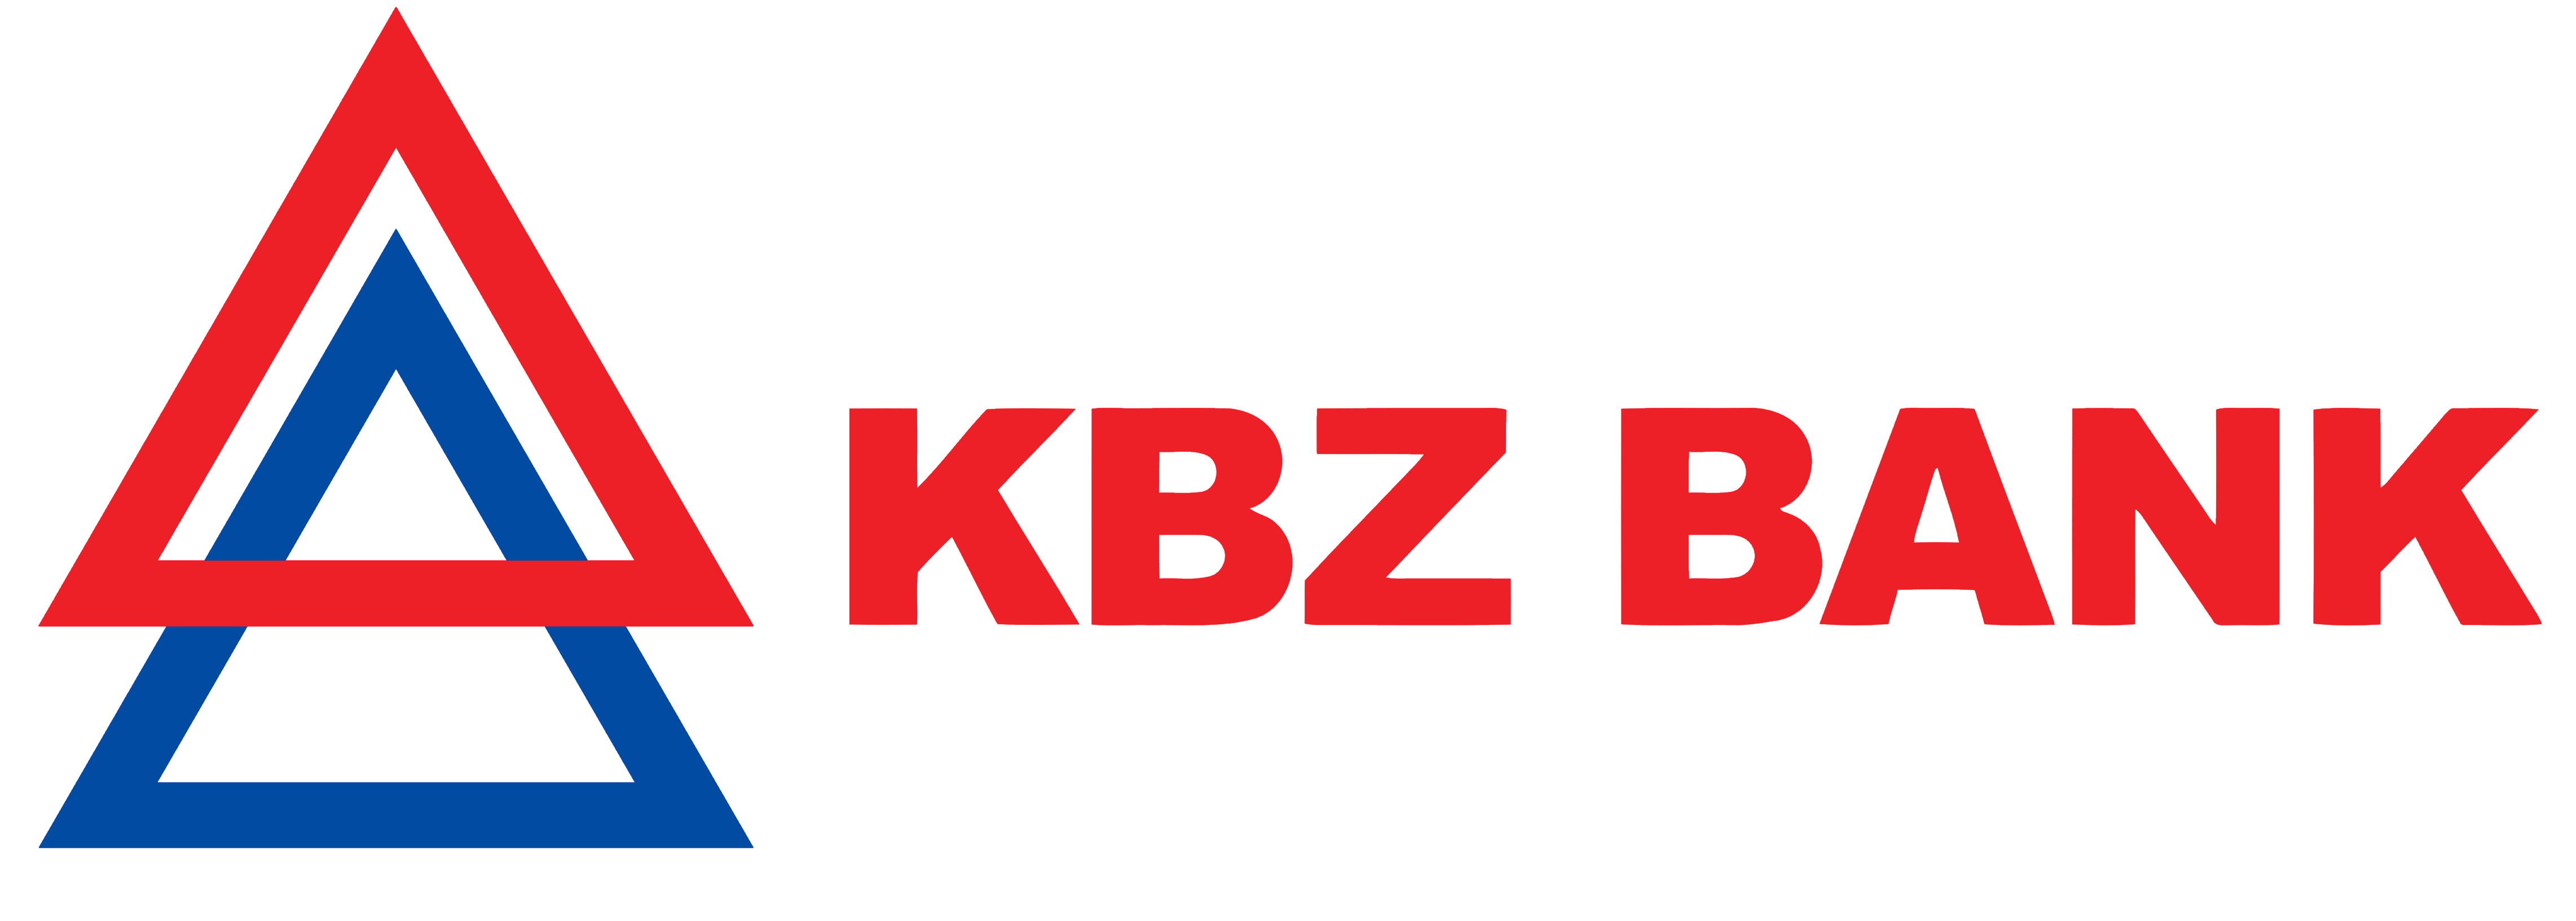 KBZ_Bank_logo_symbol